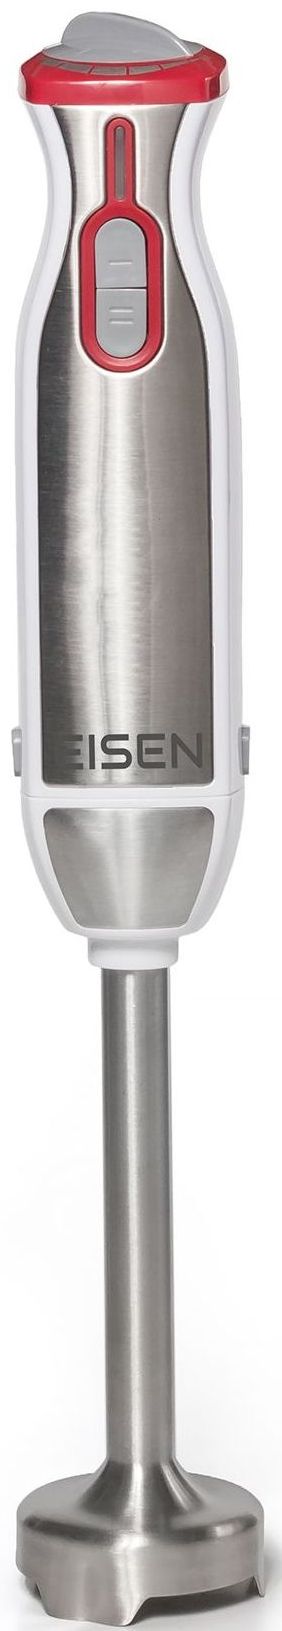 Блендер Eisen EBSS-001W цена 2035 грн - фотография 2